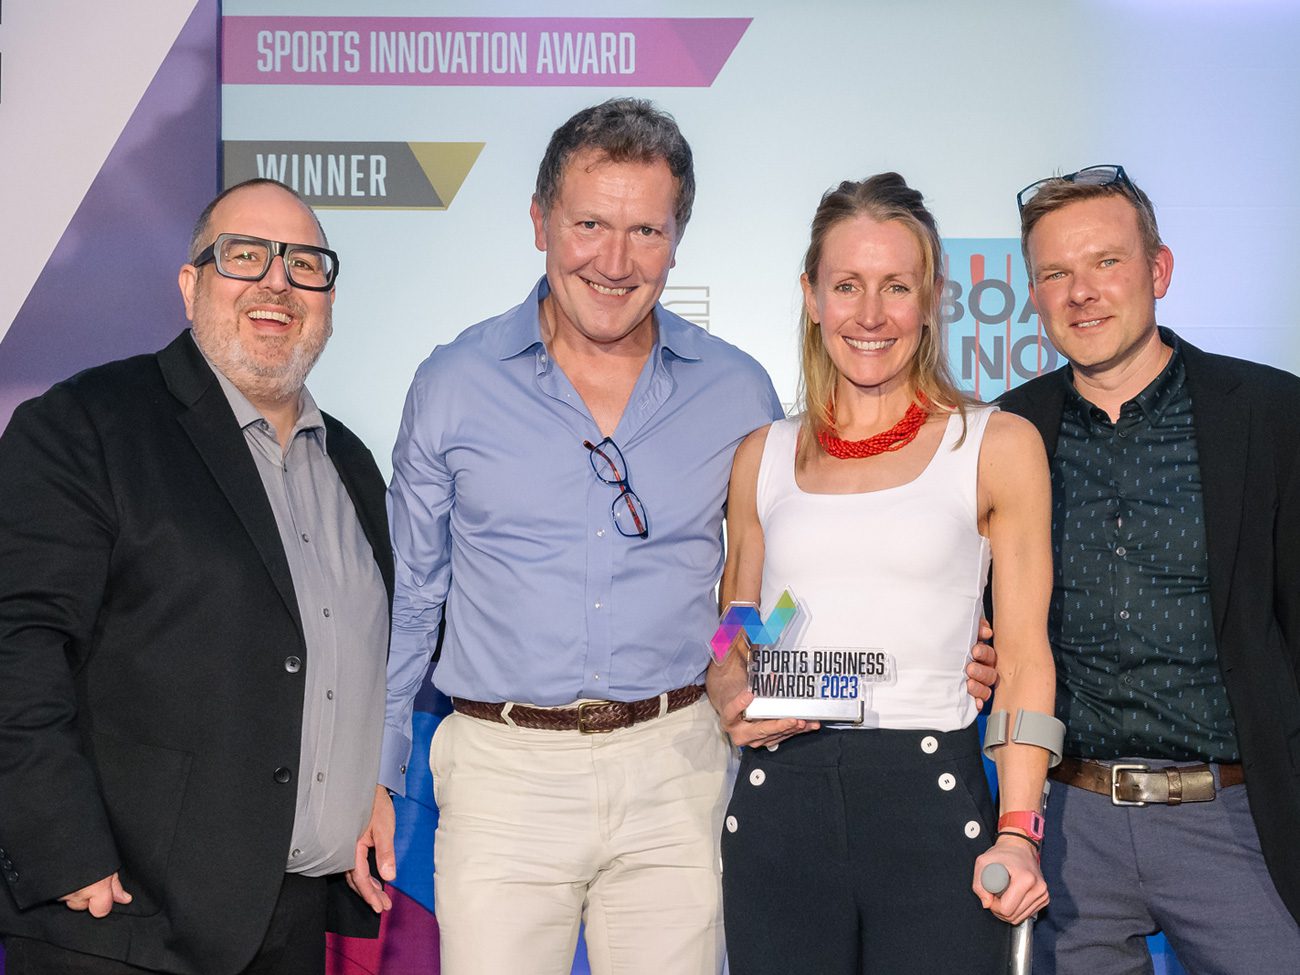 Sports Business Awards Winners – Innovation